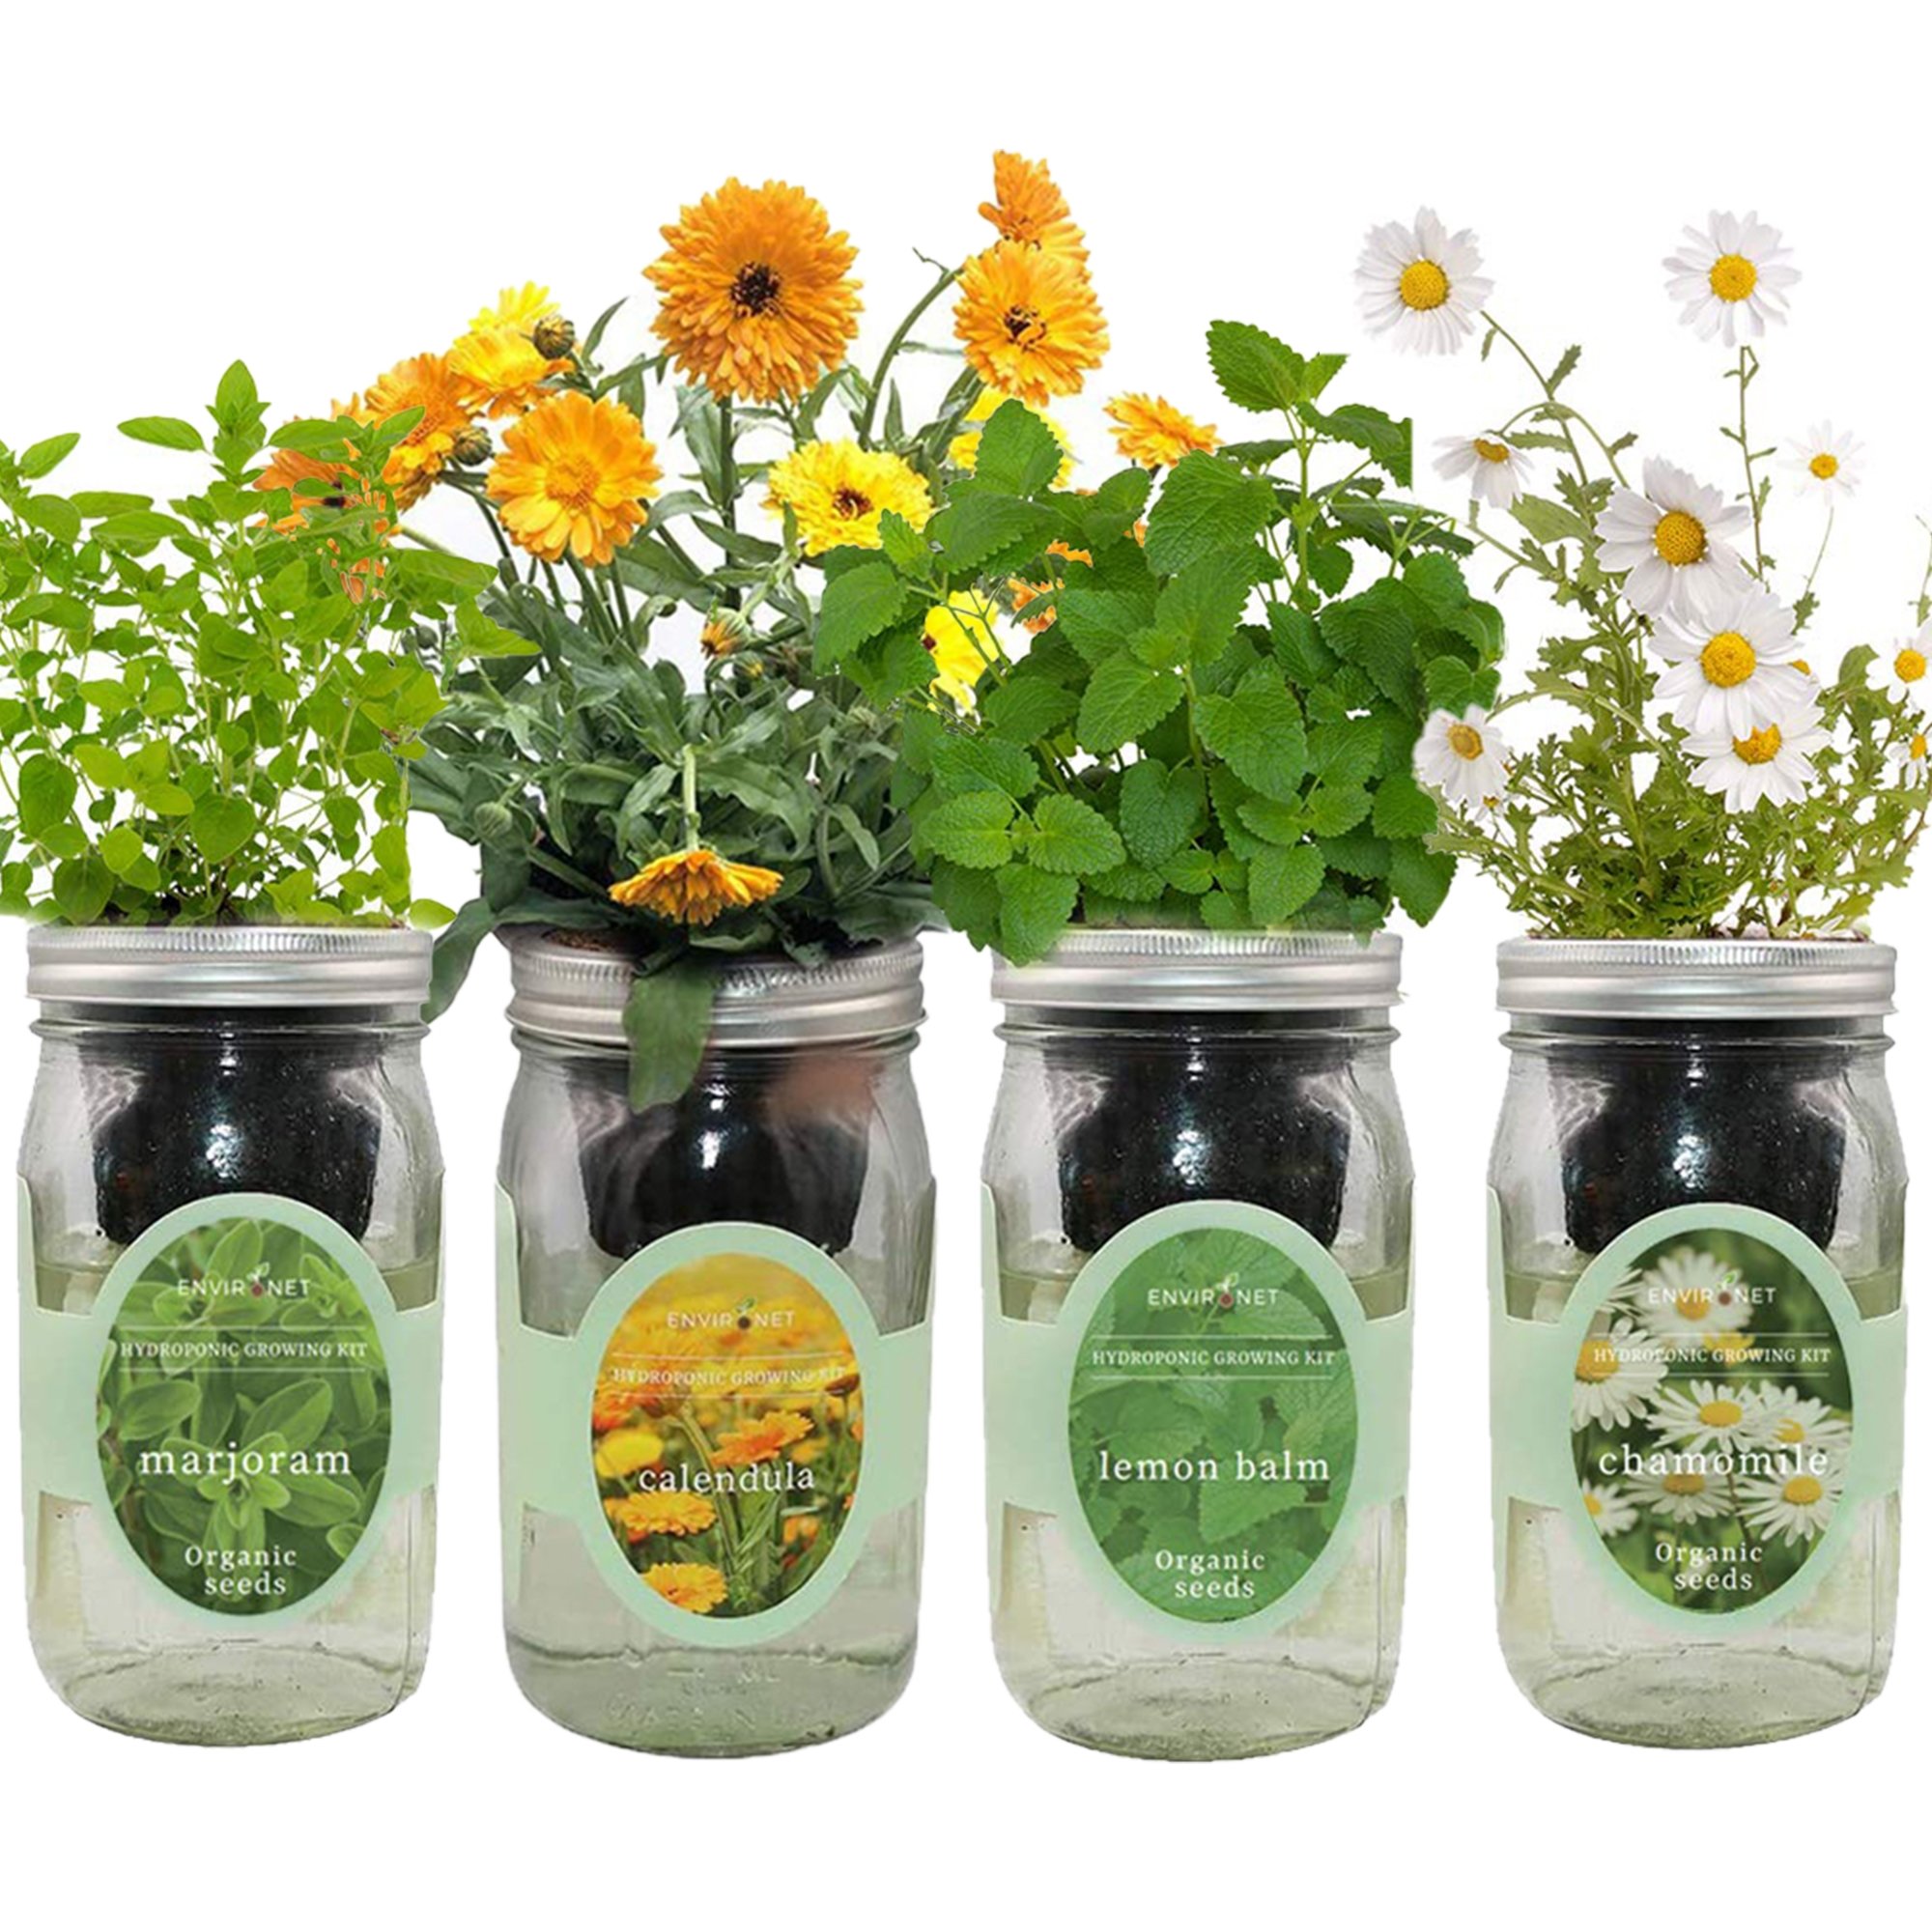 Hydroponic Herb & Flower Growing Kit Garden Bundle with Organic Seeds - Calendula,Chamomile,Lemon Balm, Marjoram